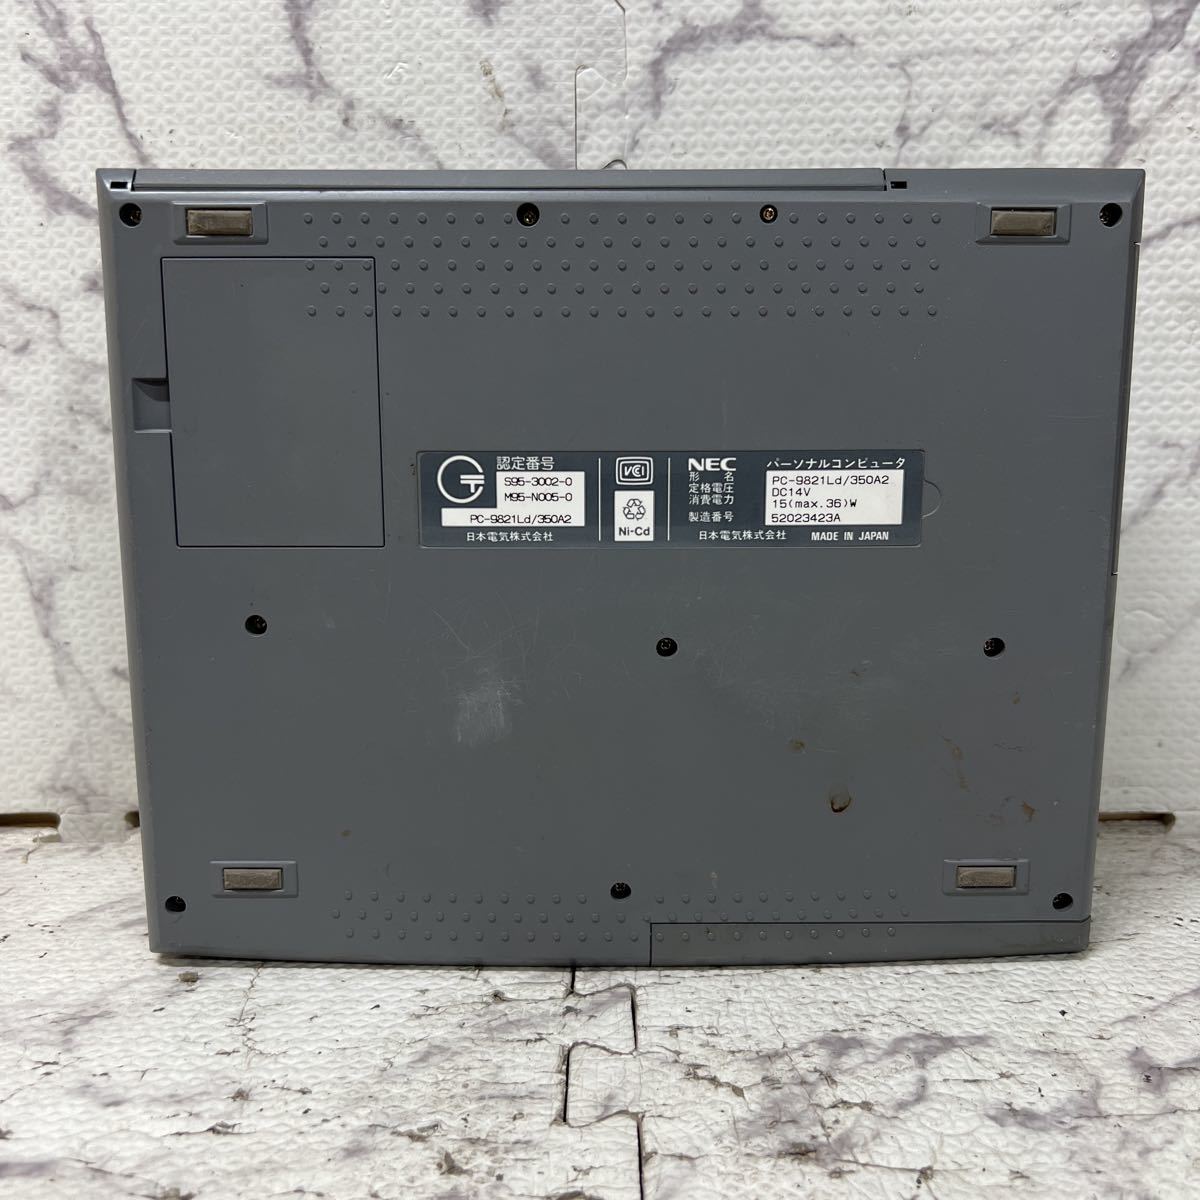 PCN98-487 супер-скидка PC98 ноутбук NEC PC-9821Ld/350A2 пуск подтверждено Junk 